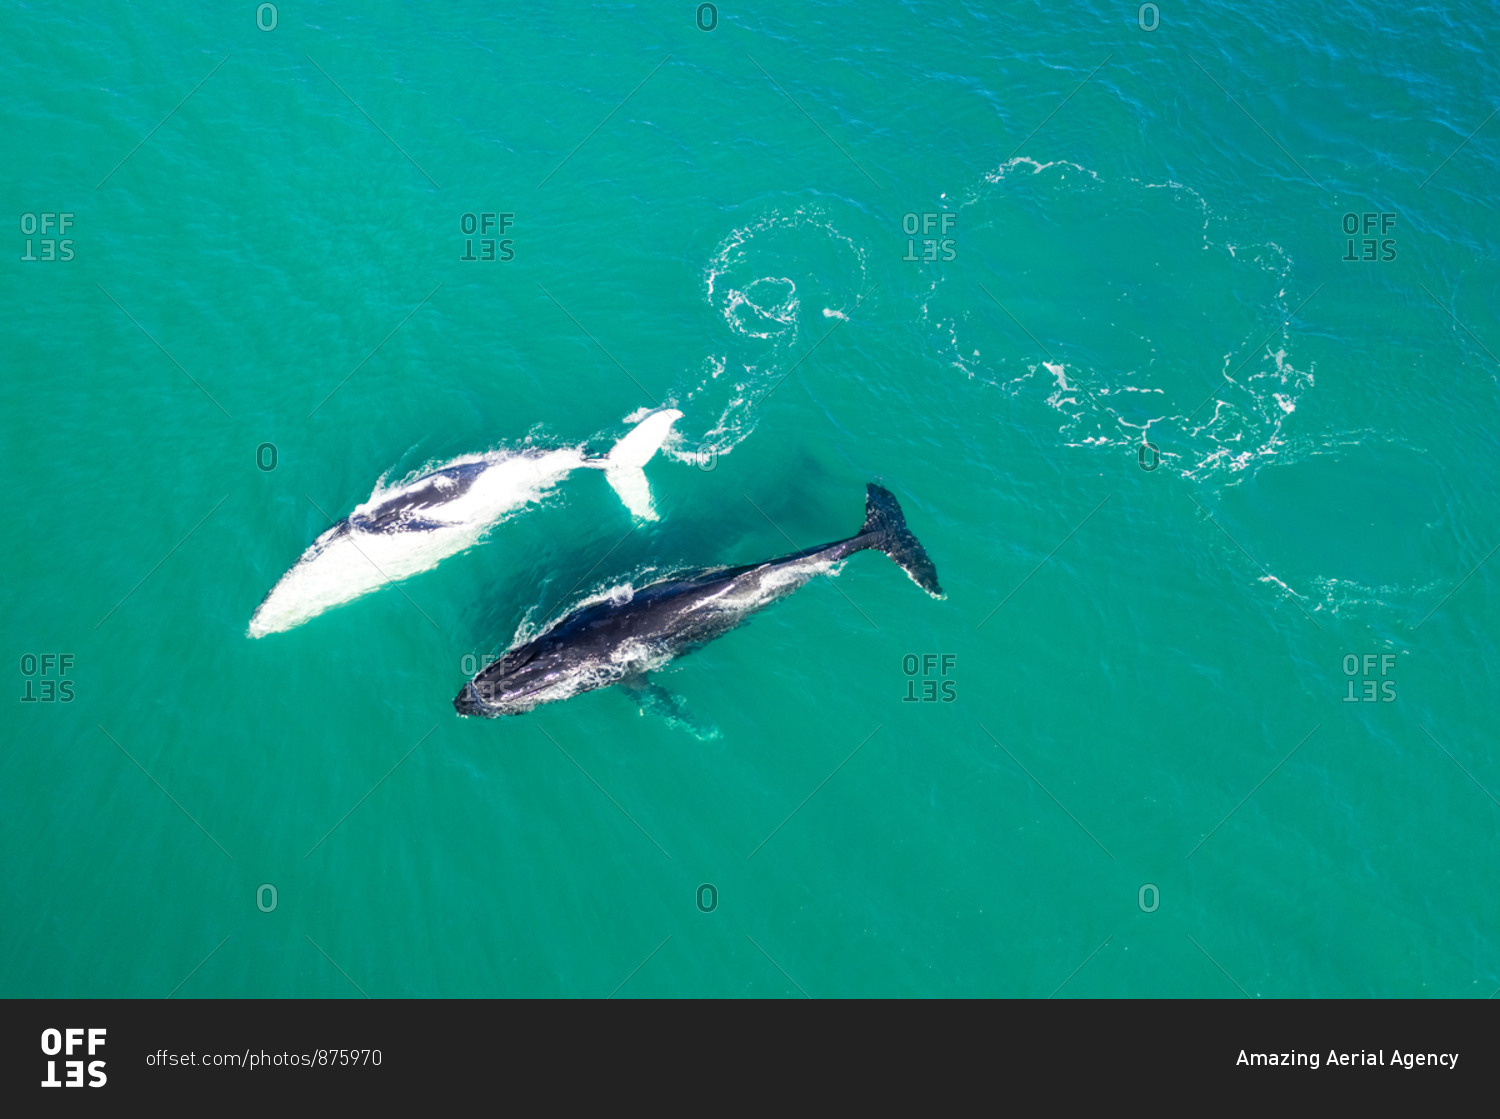 Aerial view of three whales swimming near Noosa, Australia.